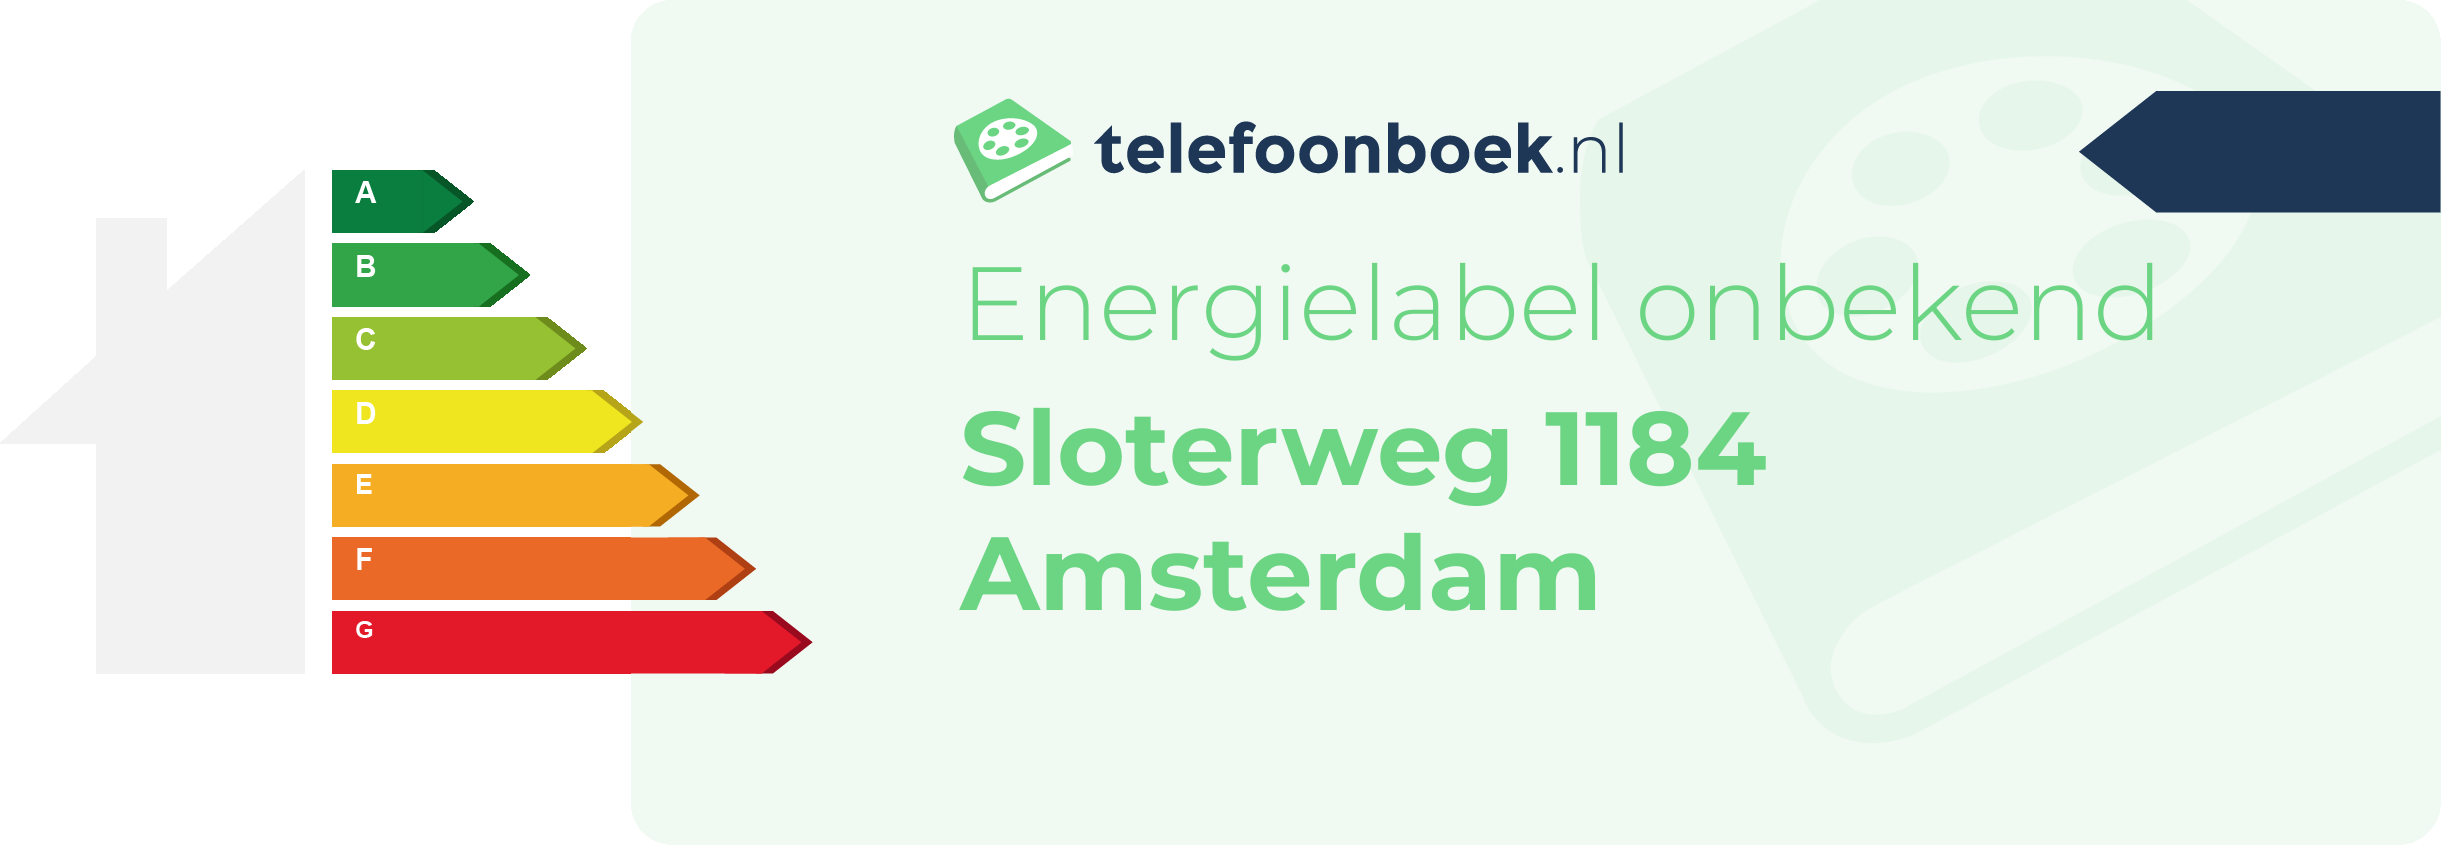 Energielabel Sloterweg 1184 Amsterdam